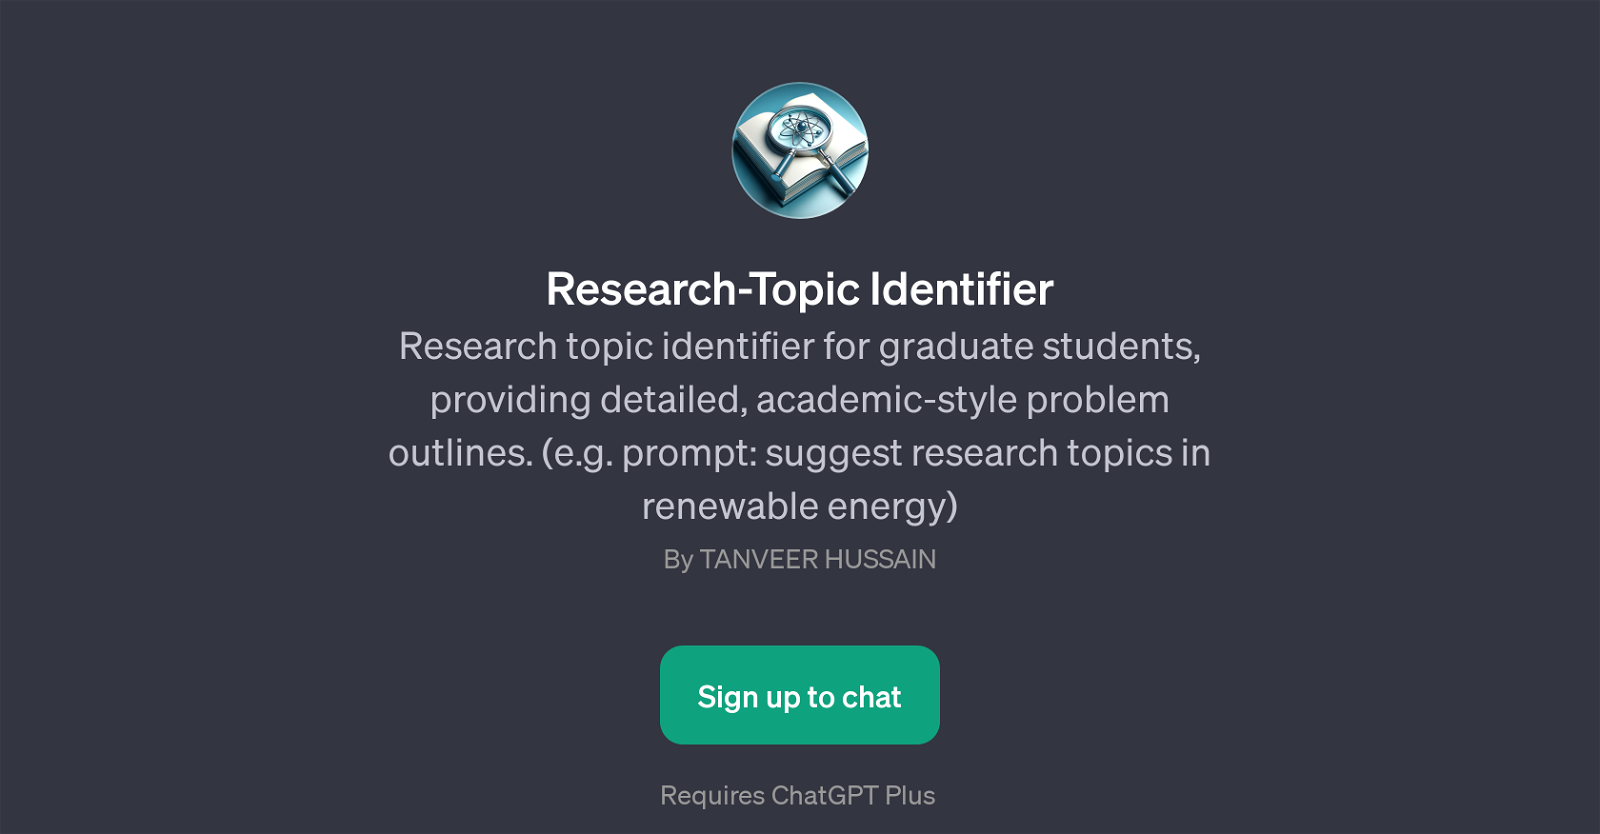 Research-Topic Identifier website